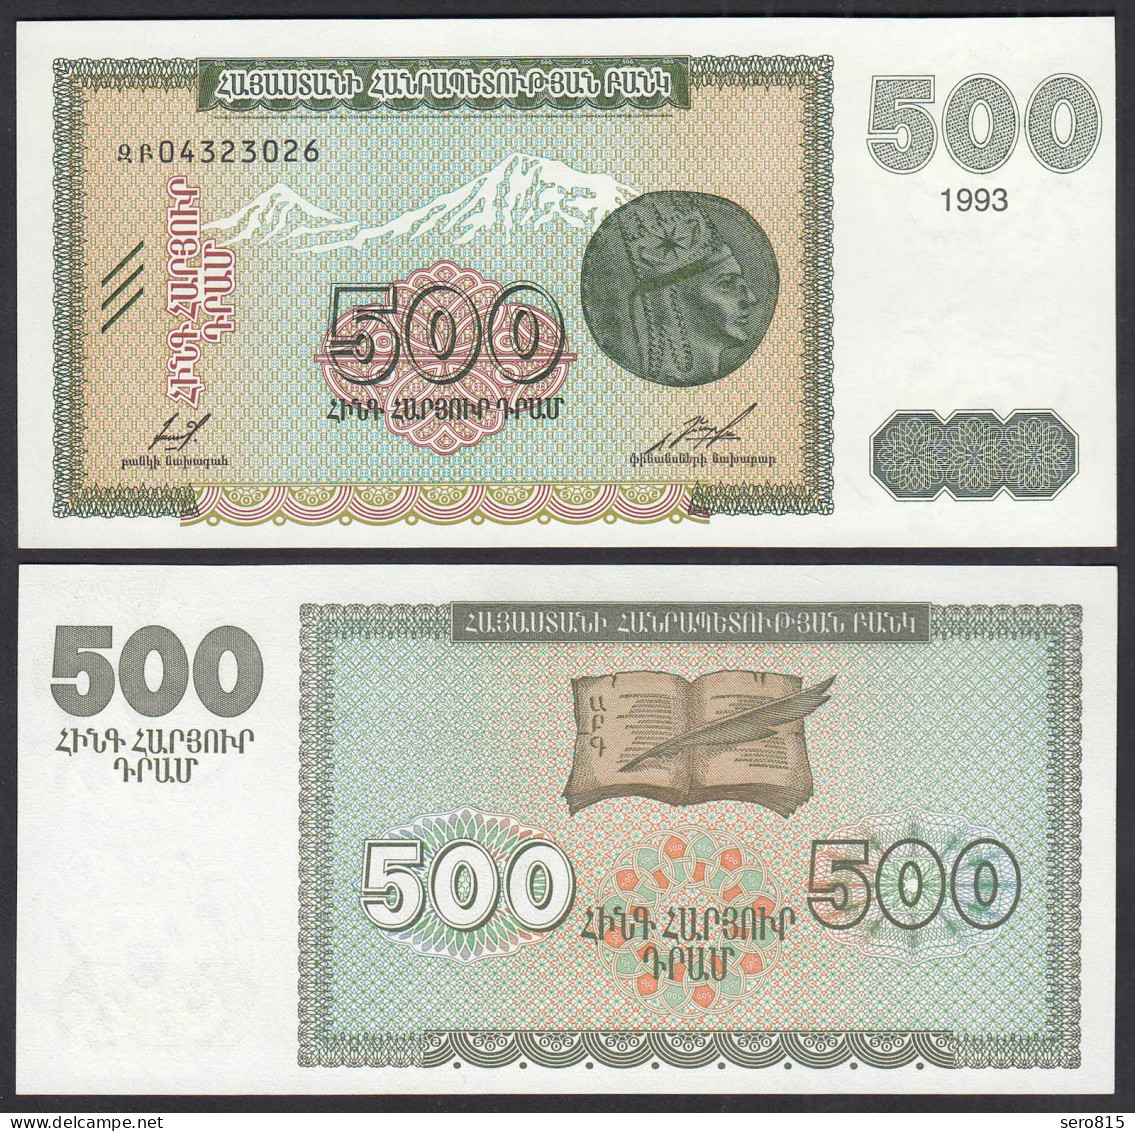 Armenien - Armenia 500 Dram 1993 Pick 38a UNC (1)     (31921 - Other - Asia